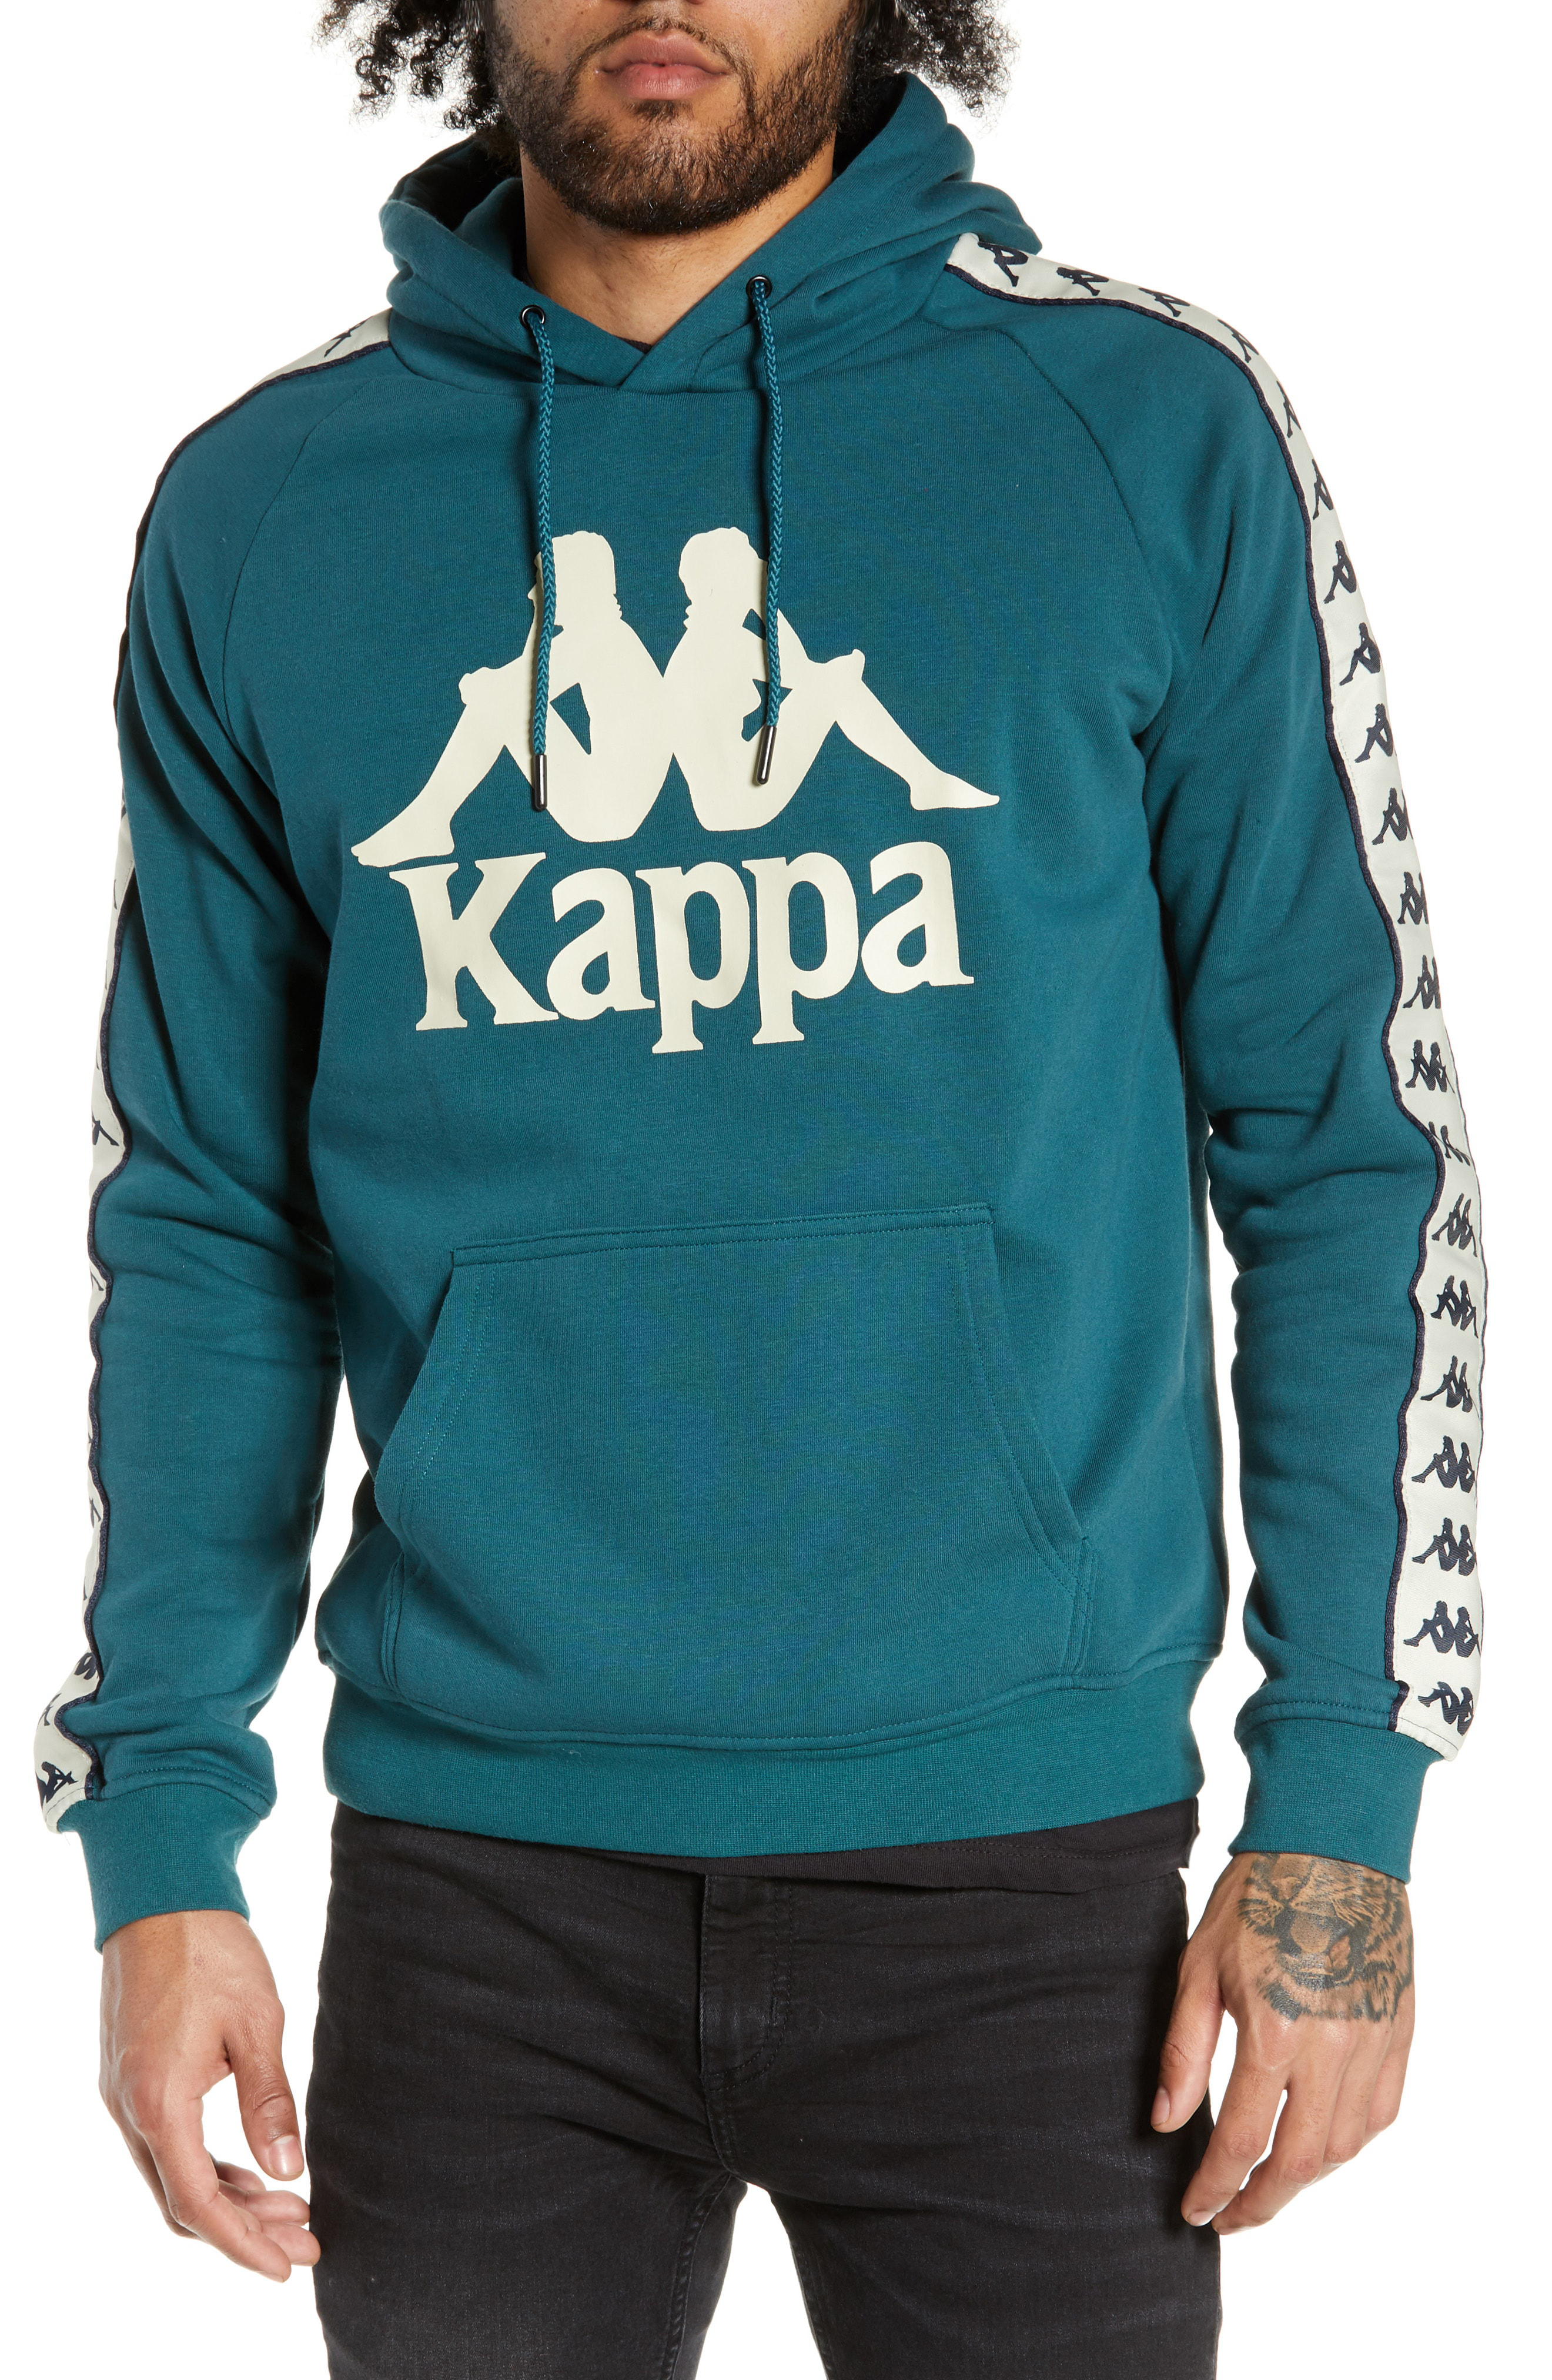 kappa hoodie for sale